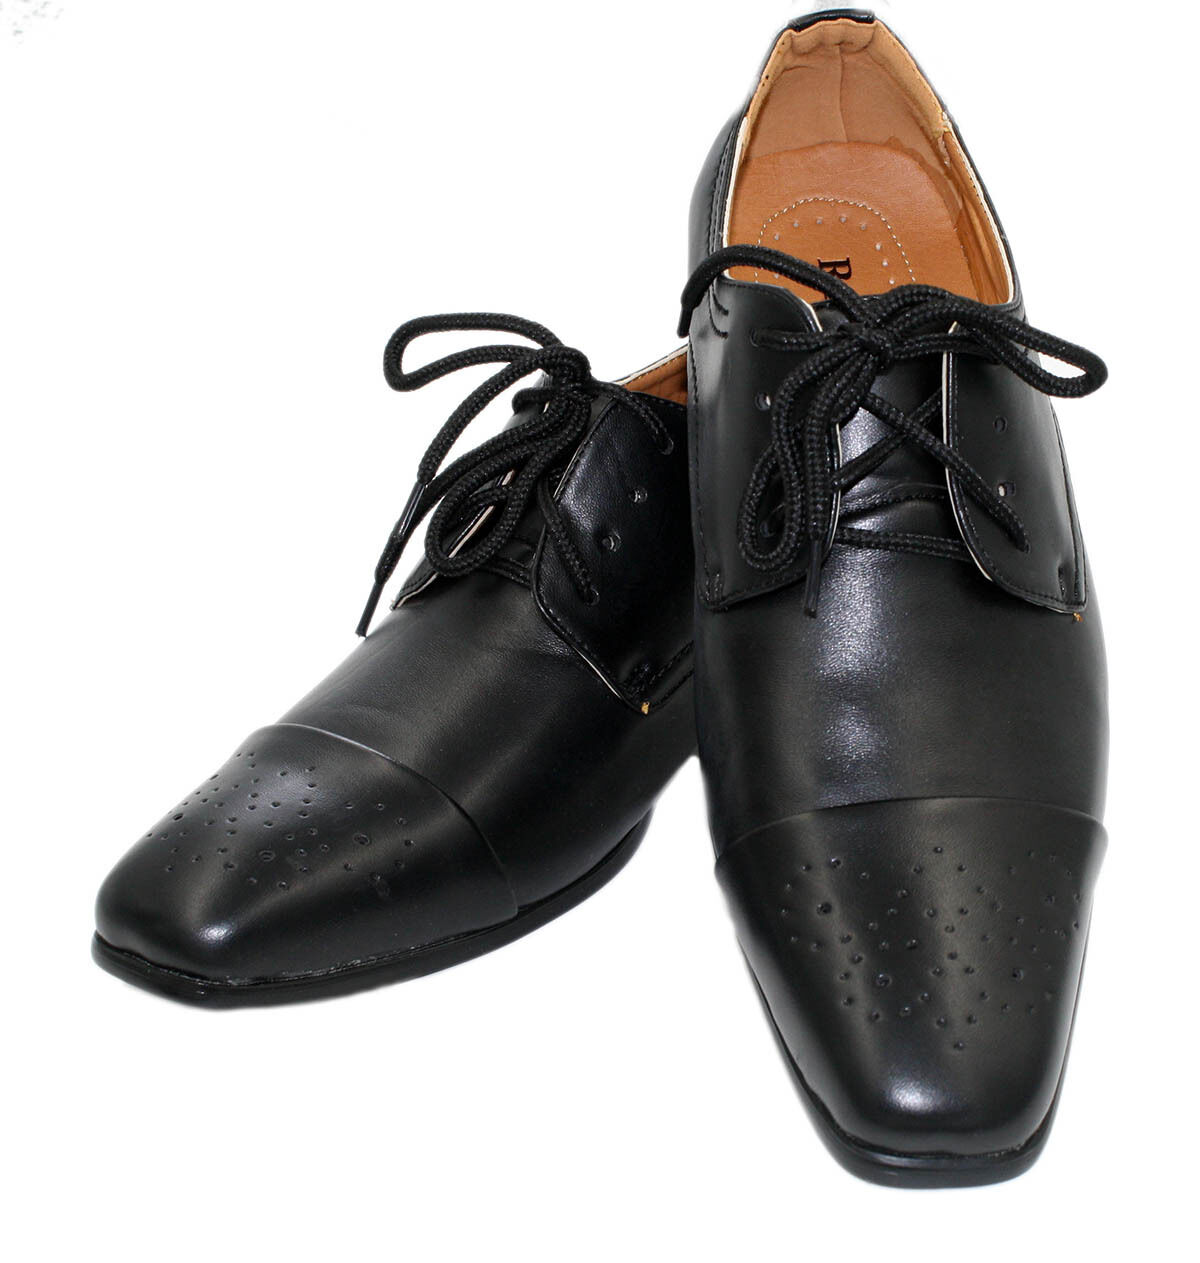 Men's Brand New Leather Slip on Dress Black Shoes Style Brad Black